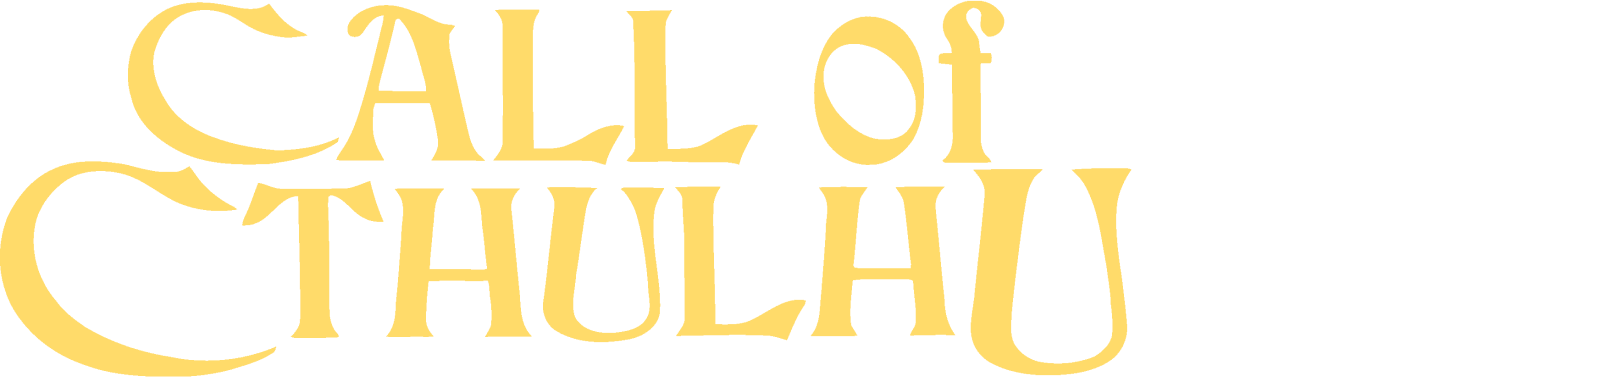 Humble RPG Bundle: Call of Cthulhu by Chaosium, Inc.